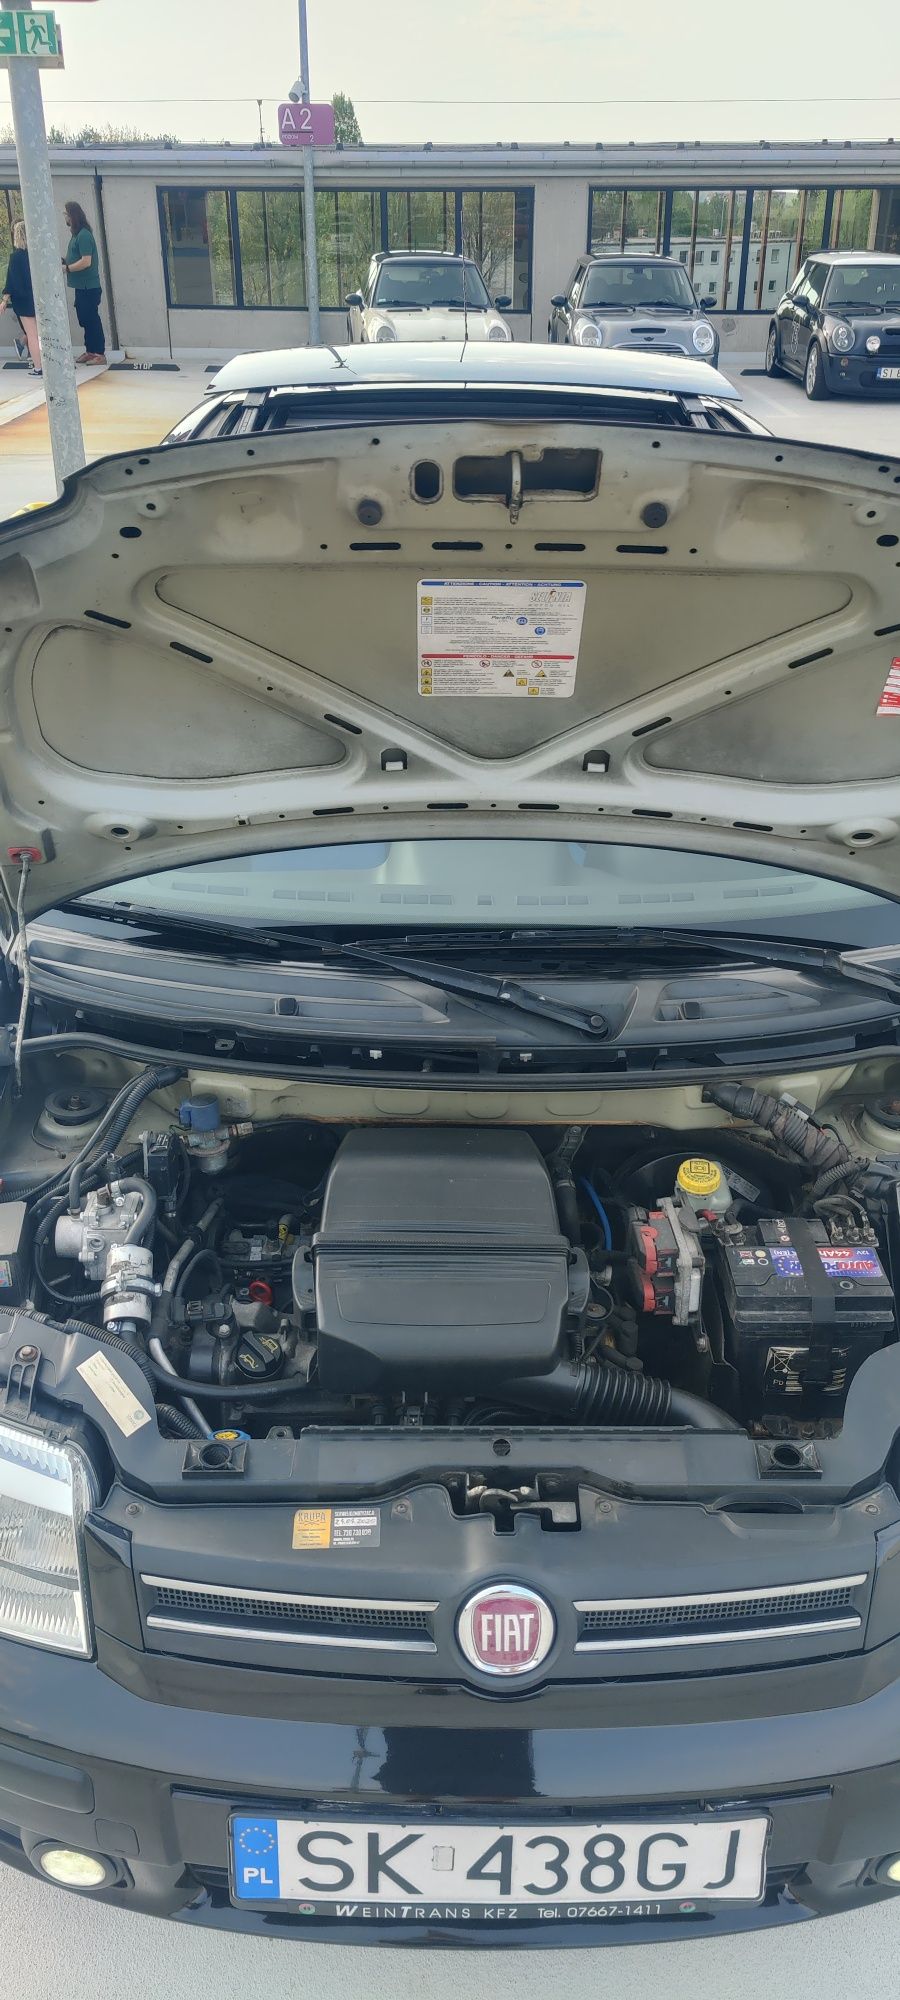 Fiat Panda gaz LPG klimatyzacja automat panorama pewna hi